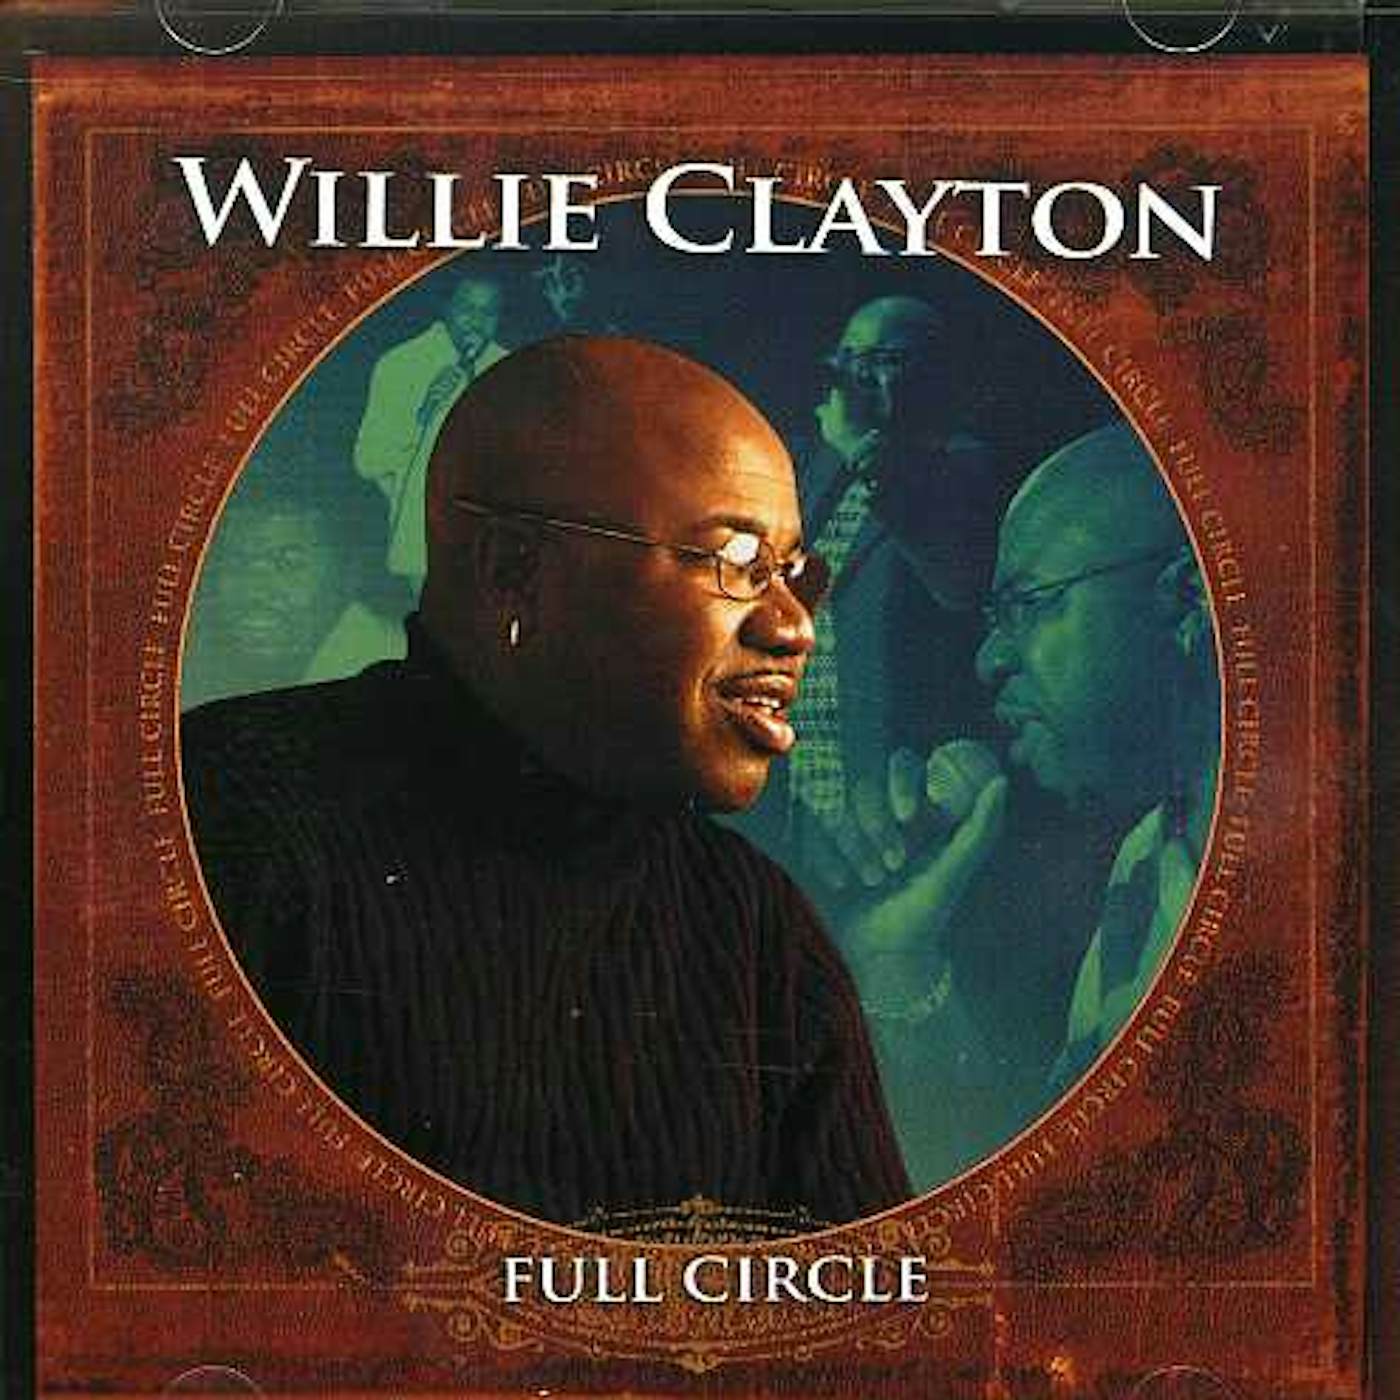 Willie Clayton FULL CIRCLE CD